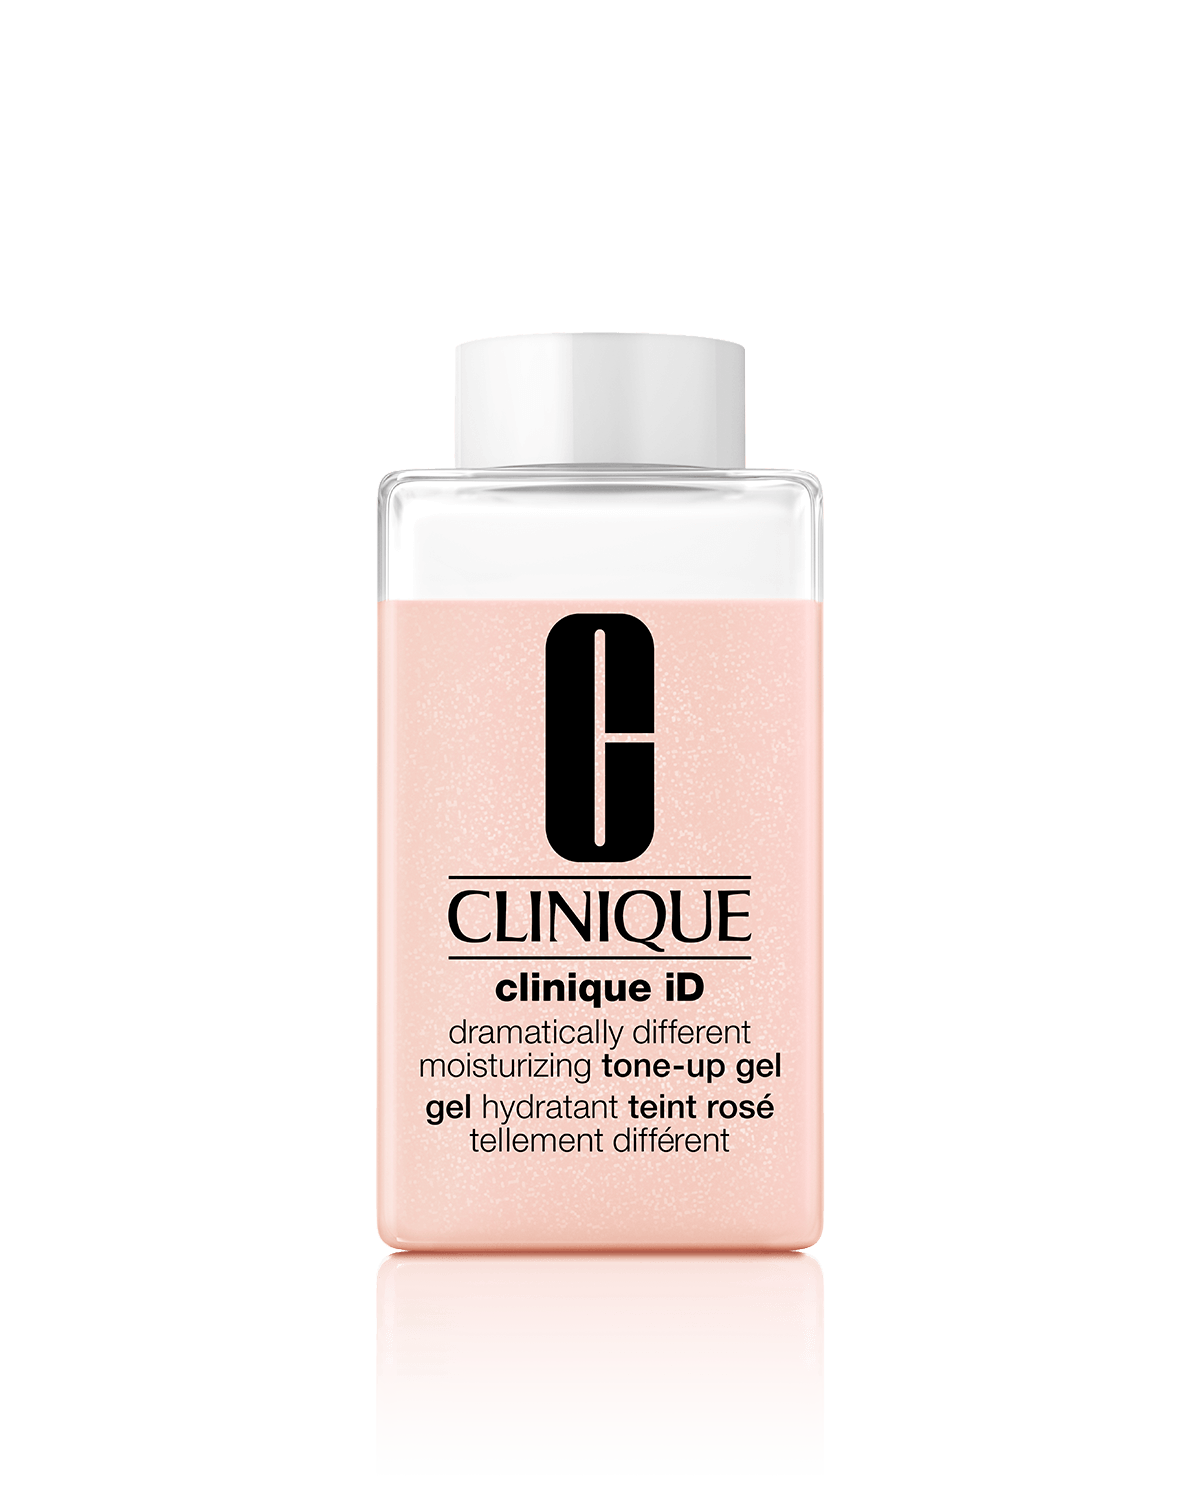 Clinique iD™ Увлажняющий гель, освежающий тон кожи Dramatically Different™ 